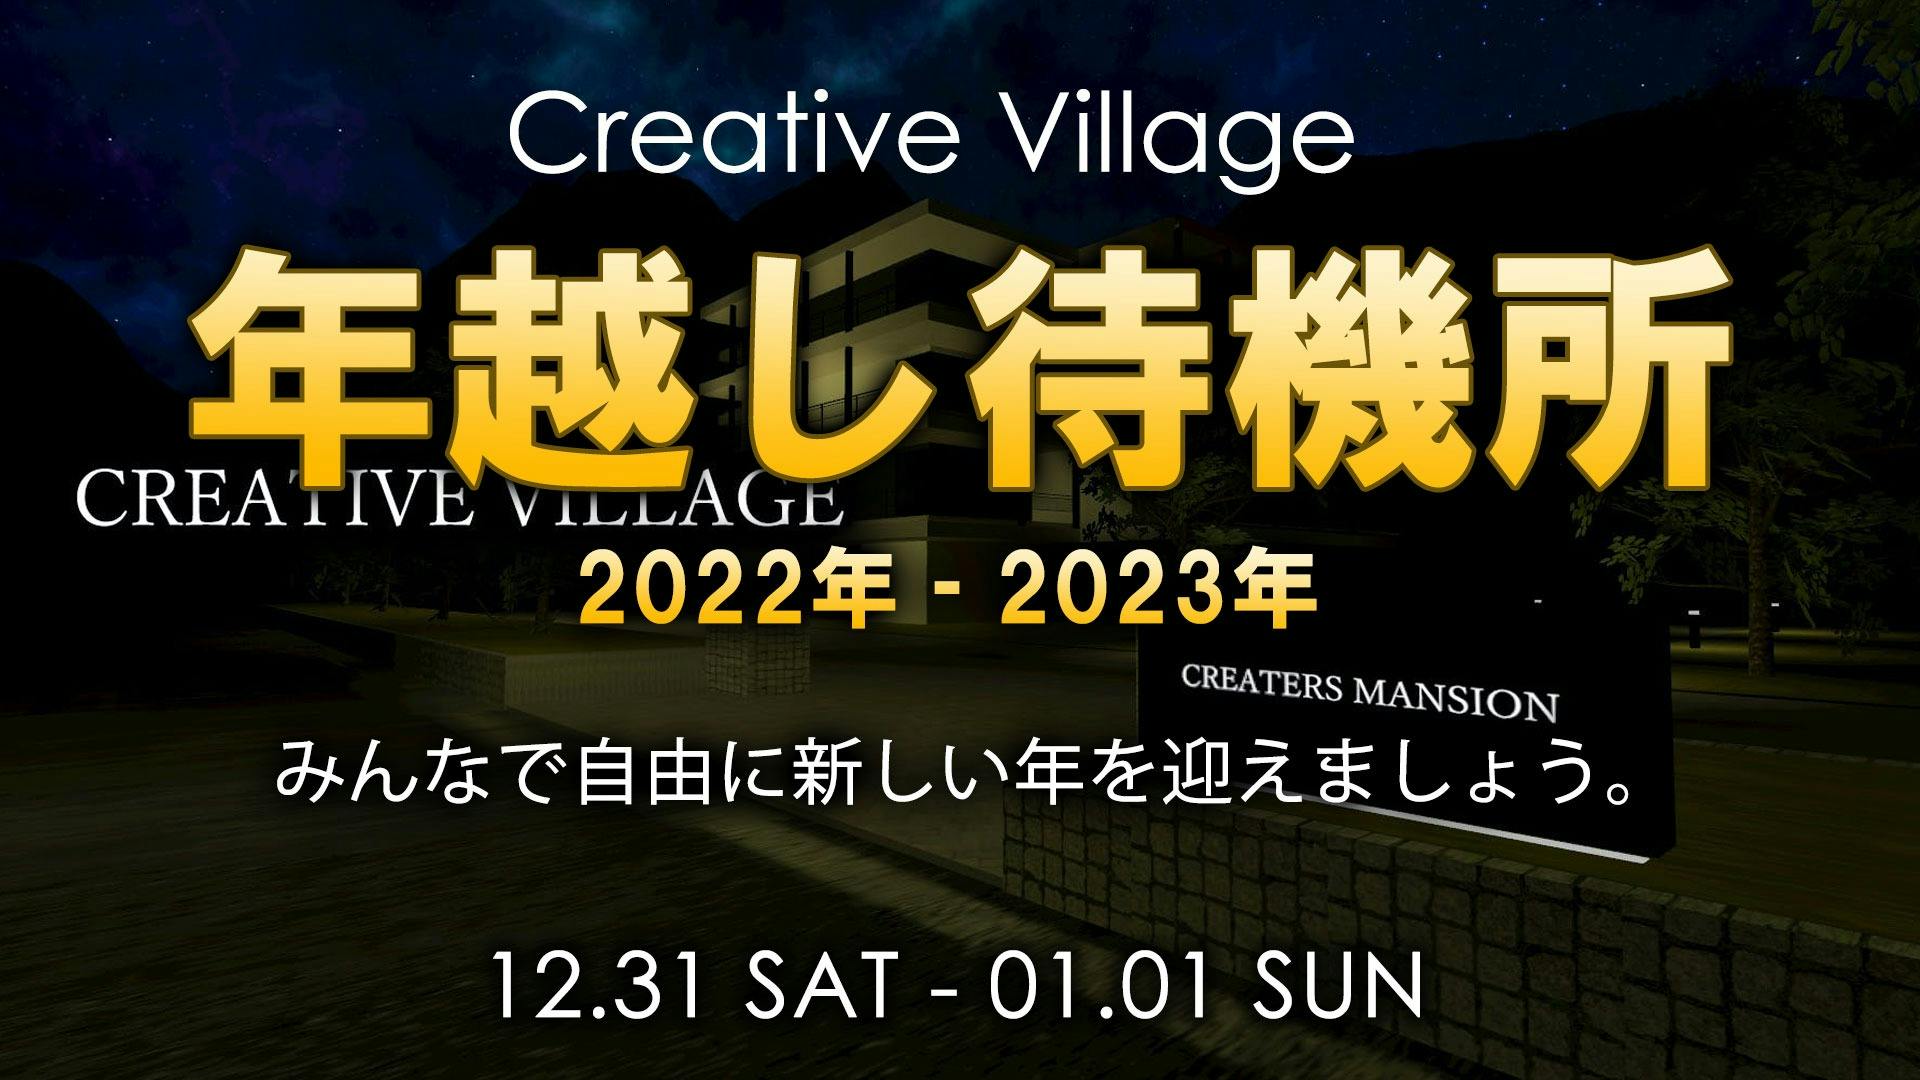 2022-2023 CREATIVE VILLAGE メタバース年越し待機所